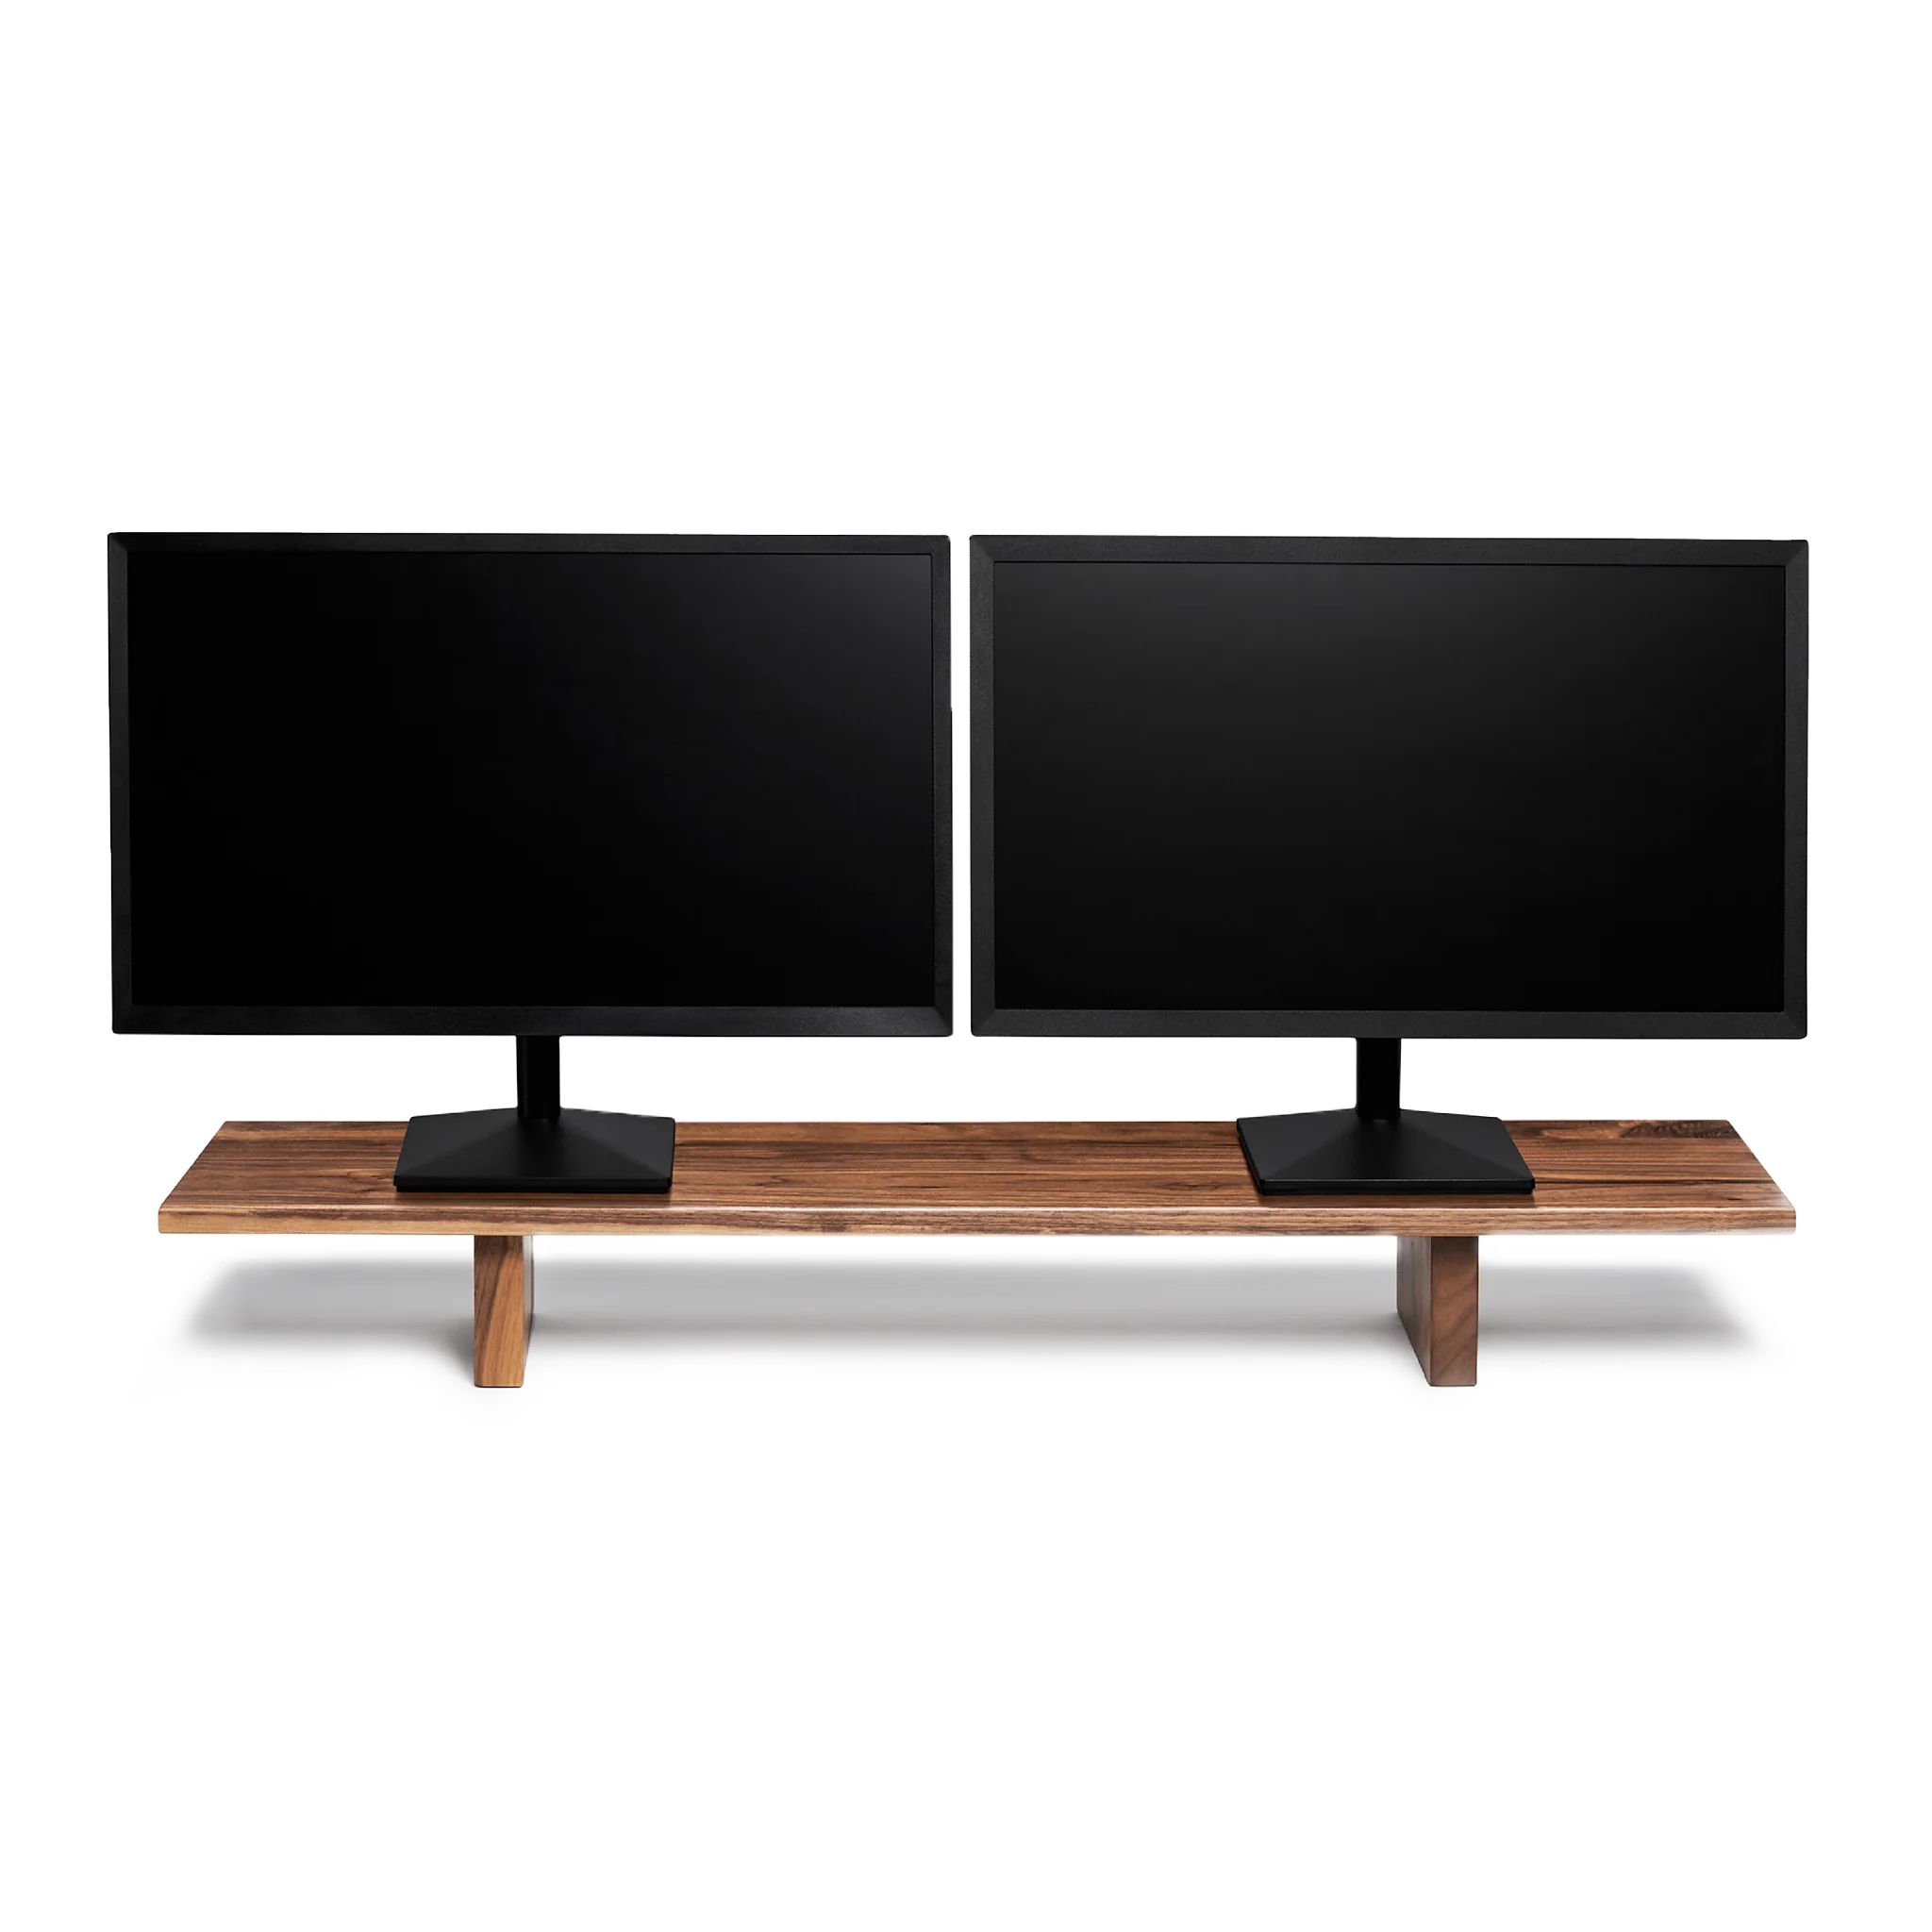 Wooden Monitor Shelf - Desk Organization | ergonofis | ergonofis